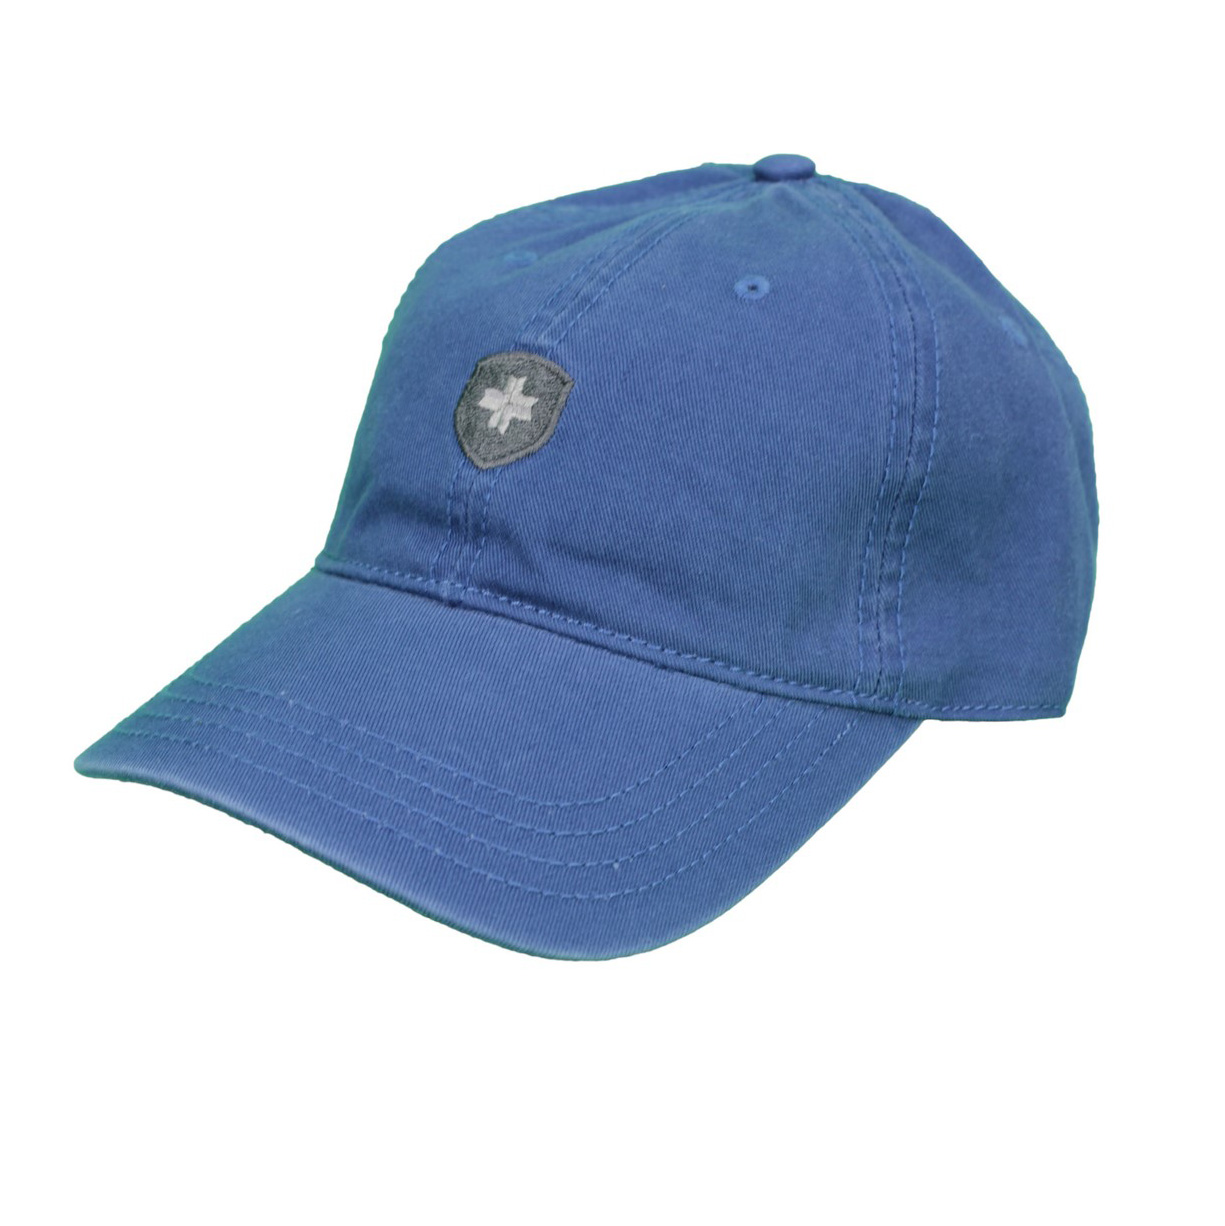 Wellensteyn Baseball Cap Kappe blau PBSC 198 jeansblue